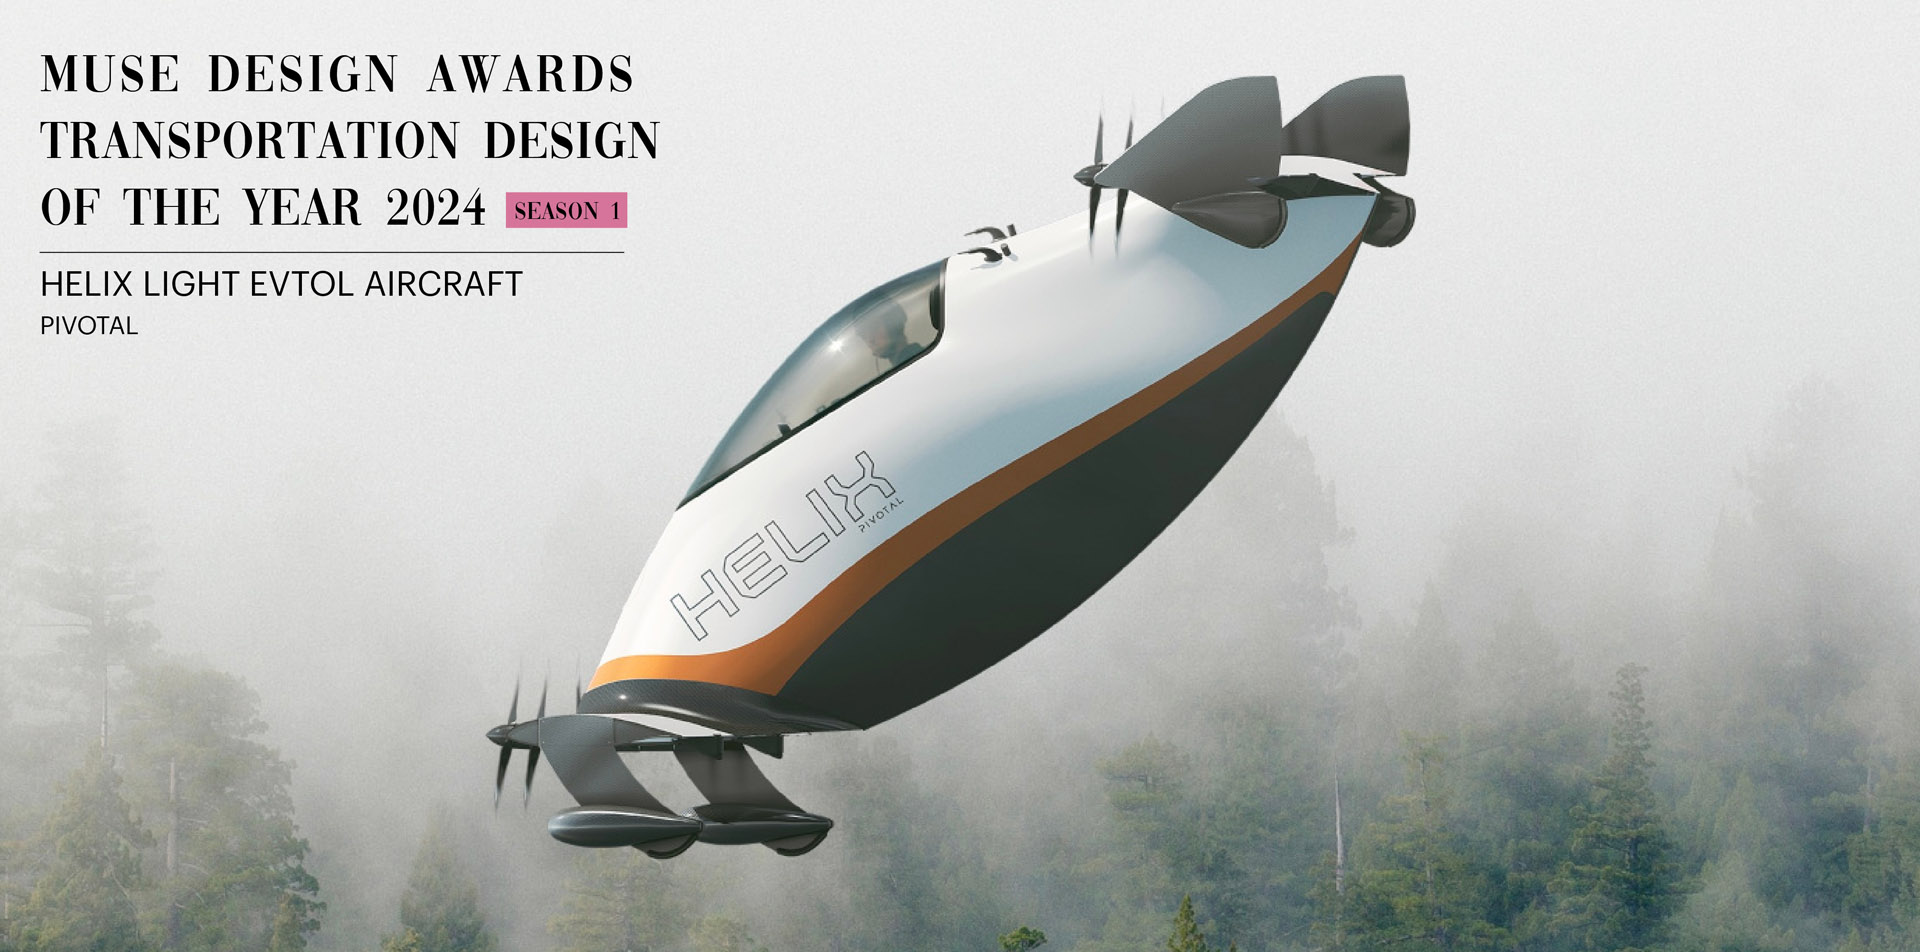 MUSE Design Awards - Transportation Design Awards 2023